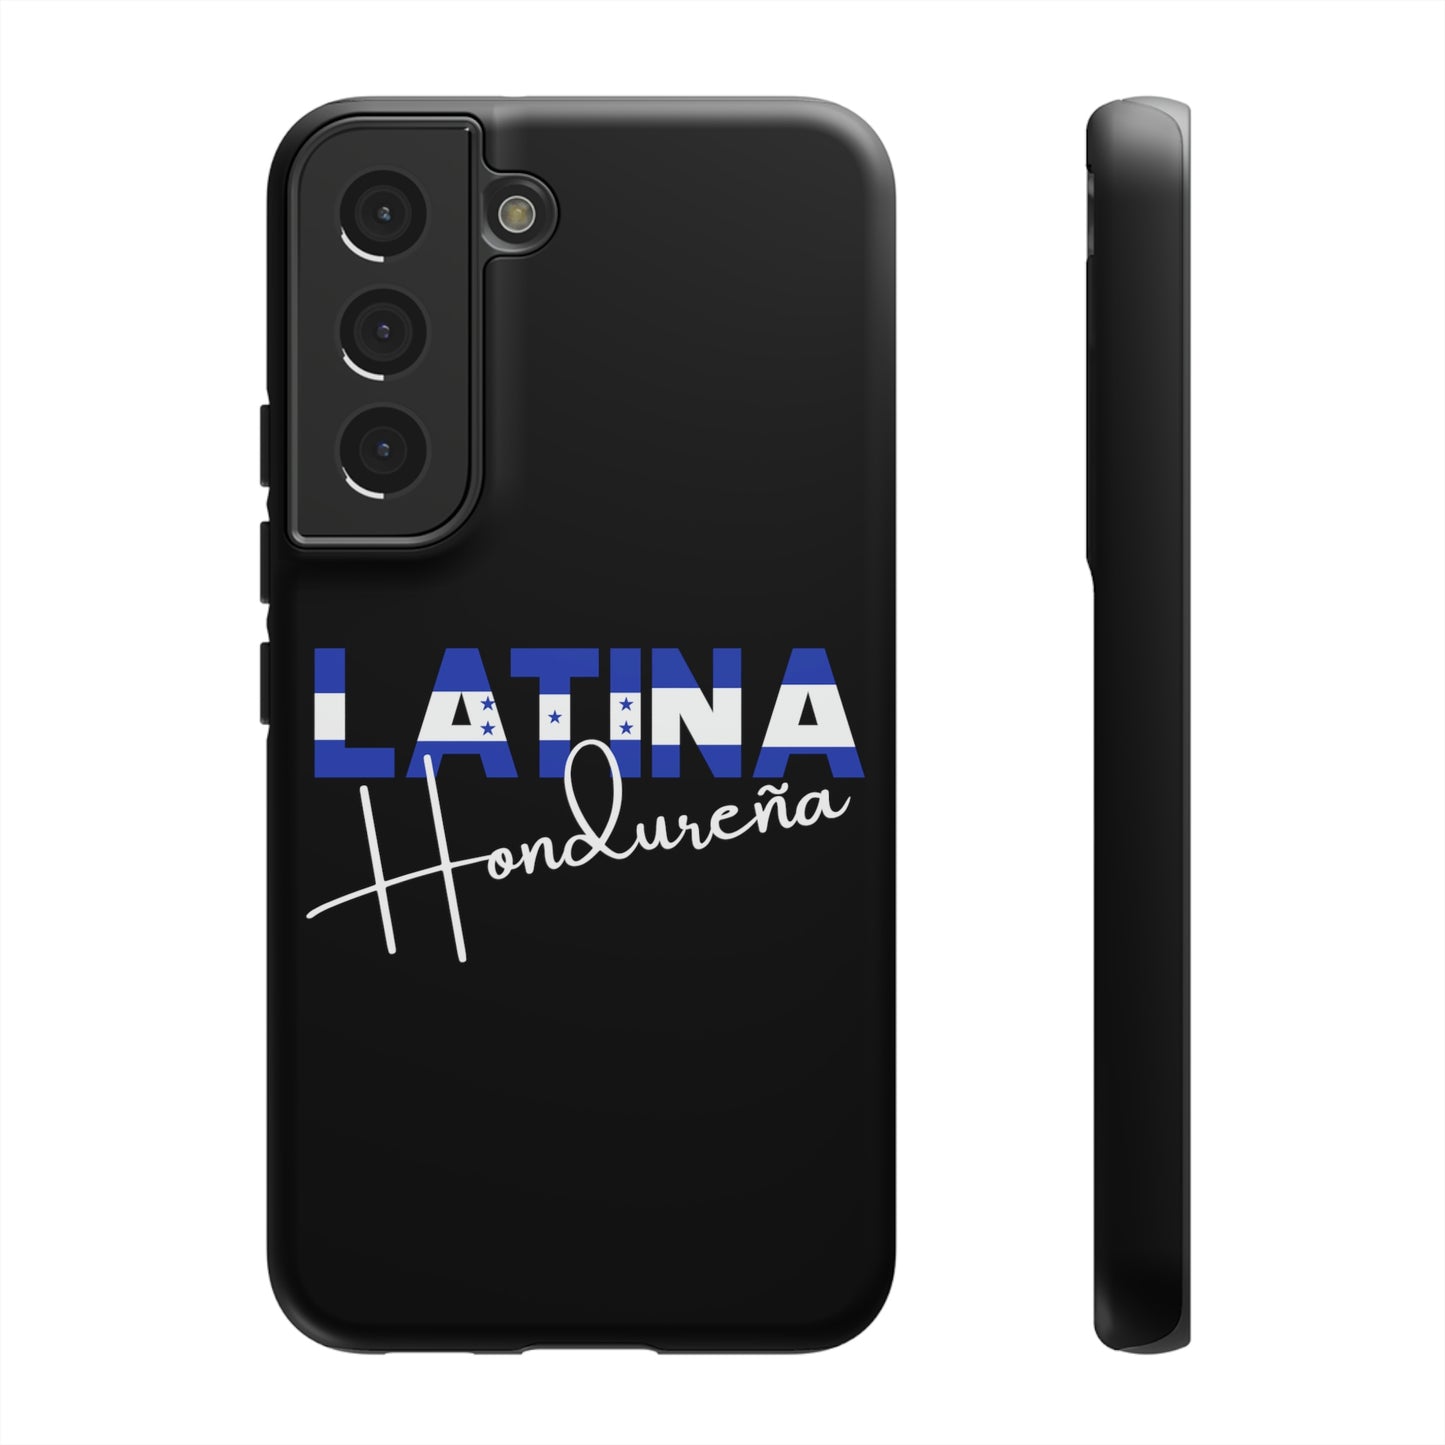 Latina Hondureña, Phone Case